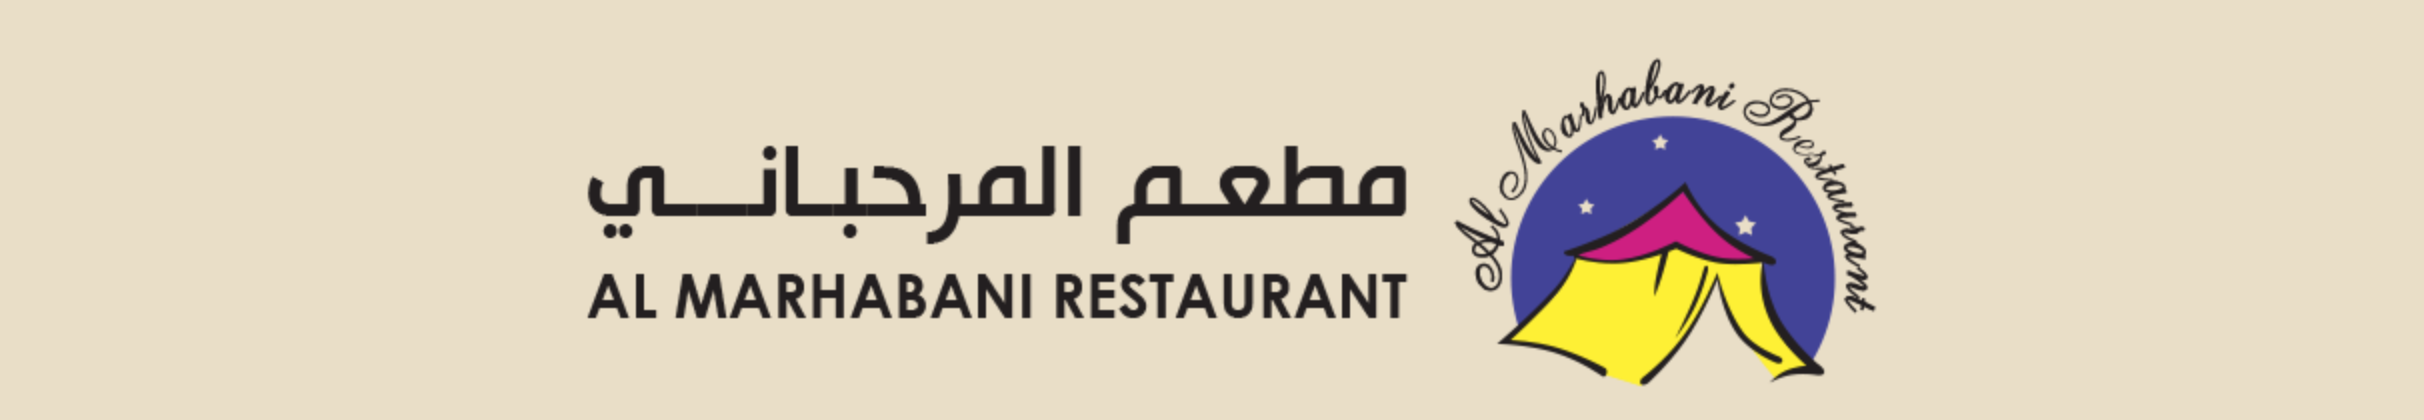 Al Marhabani Restaurant